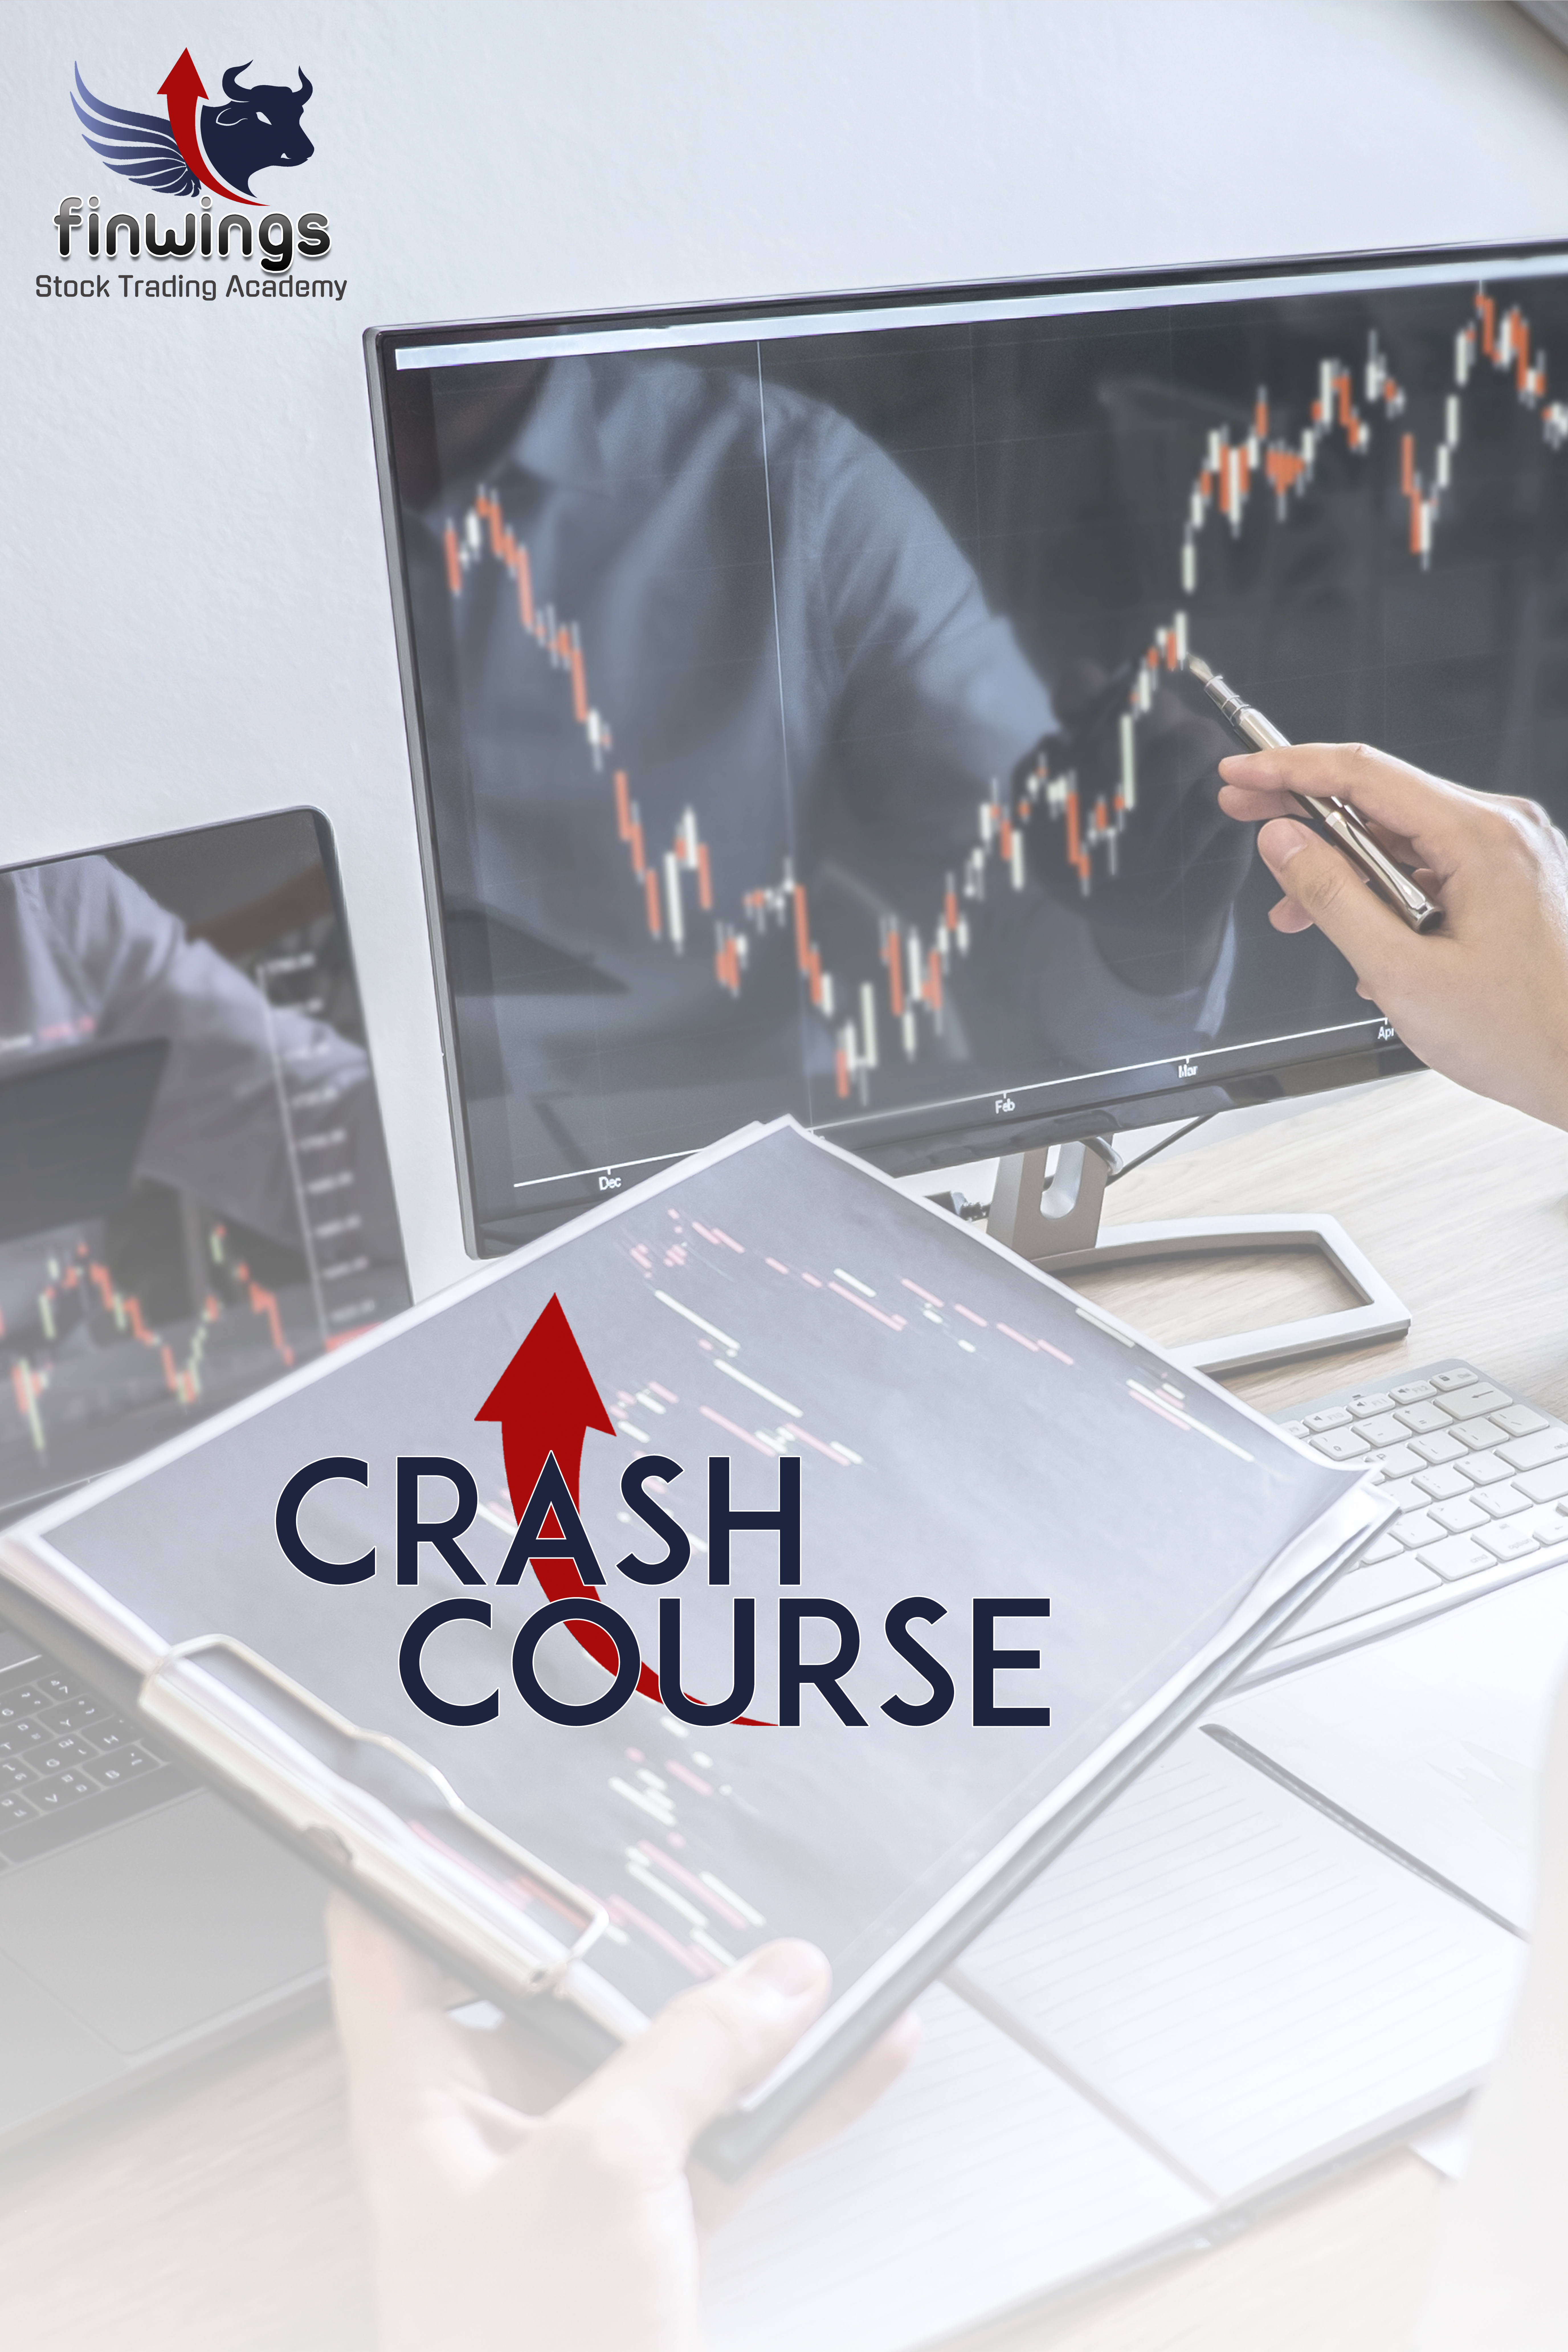 Stock Trading Crash Courses Finwings Stock Trading Academy